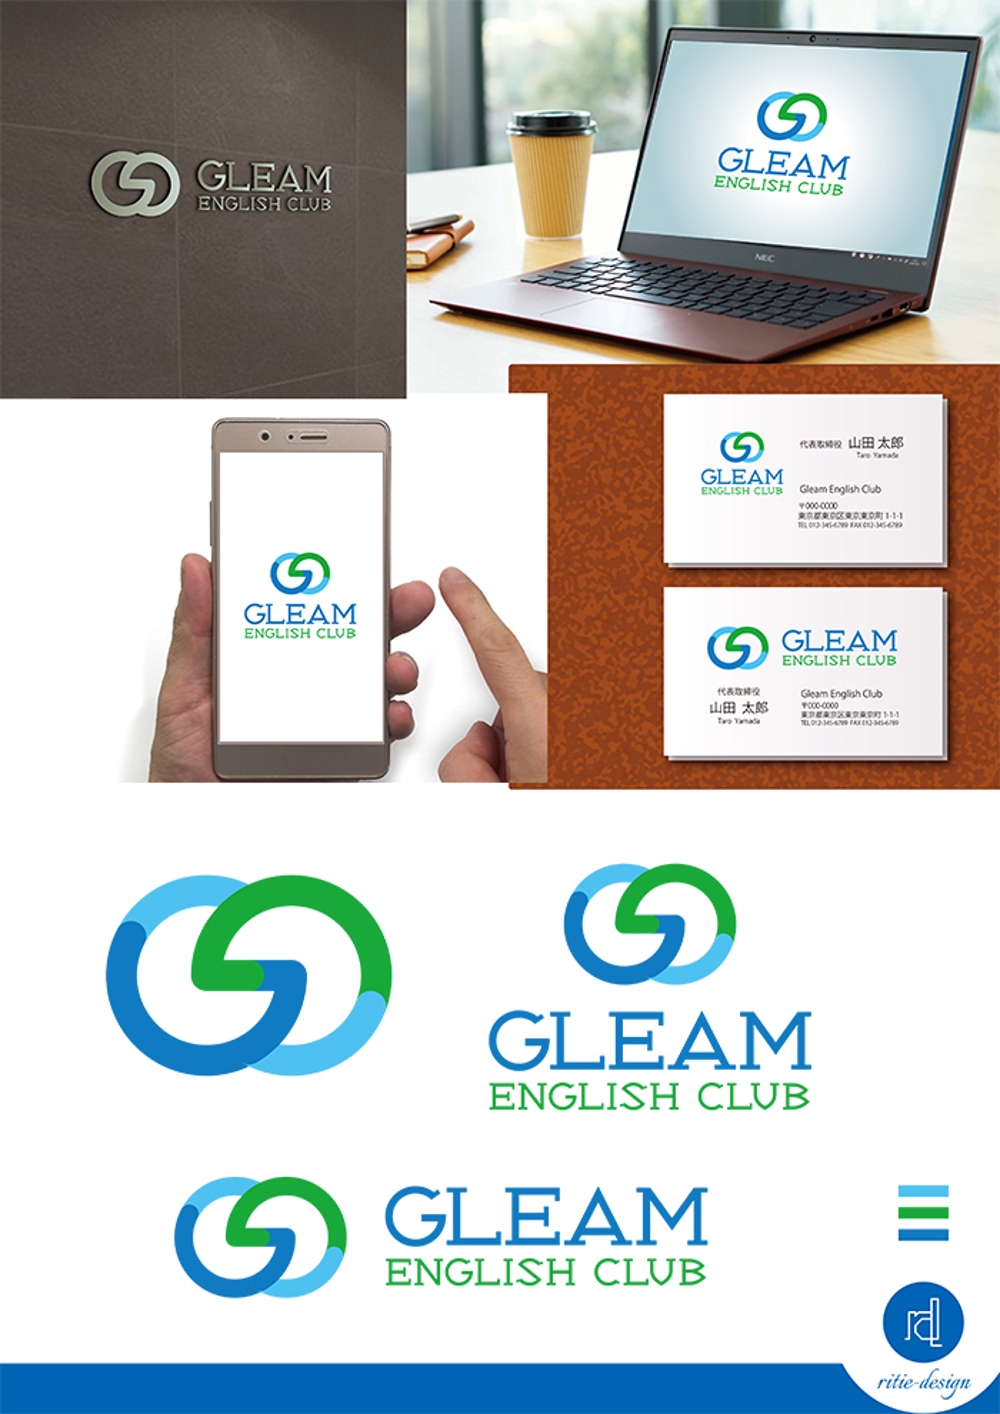 Gleam English Club.jpg